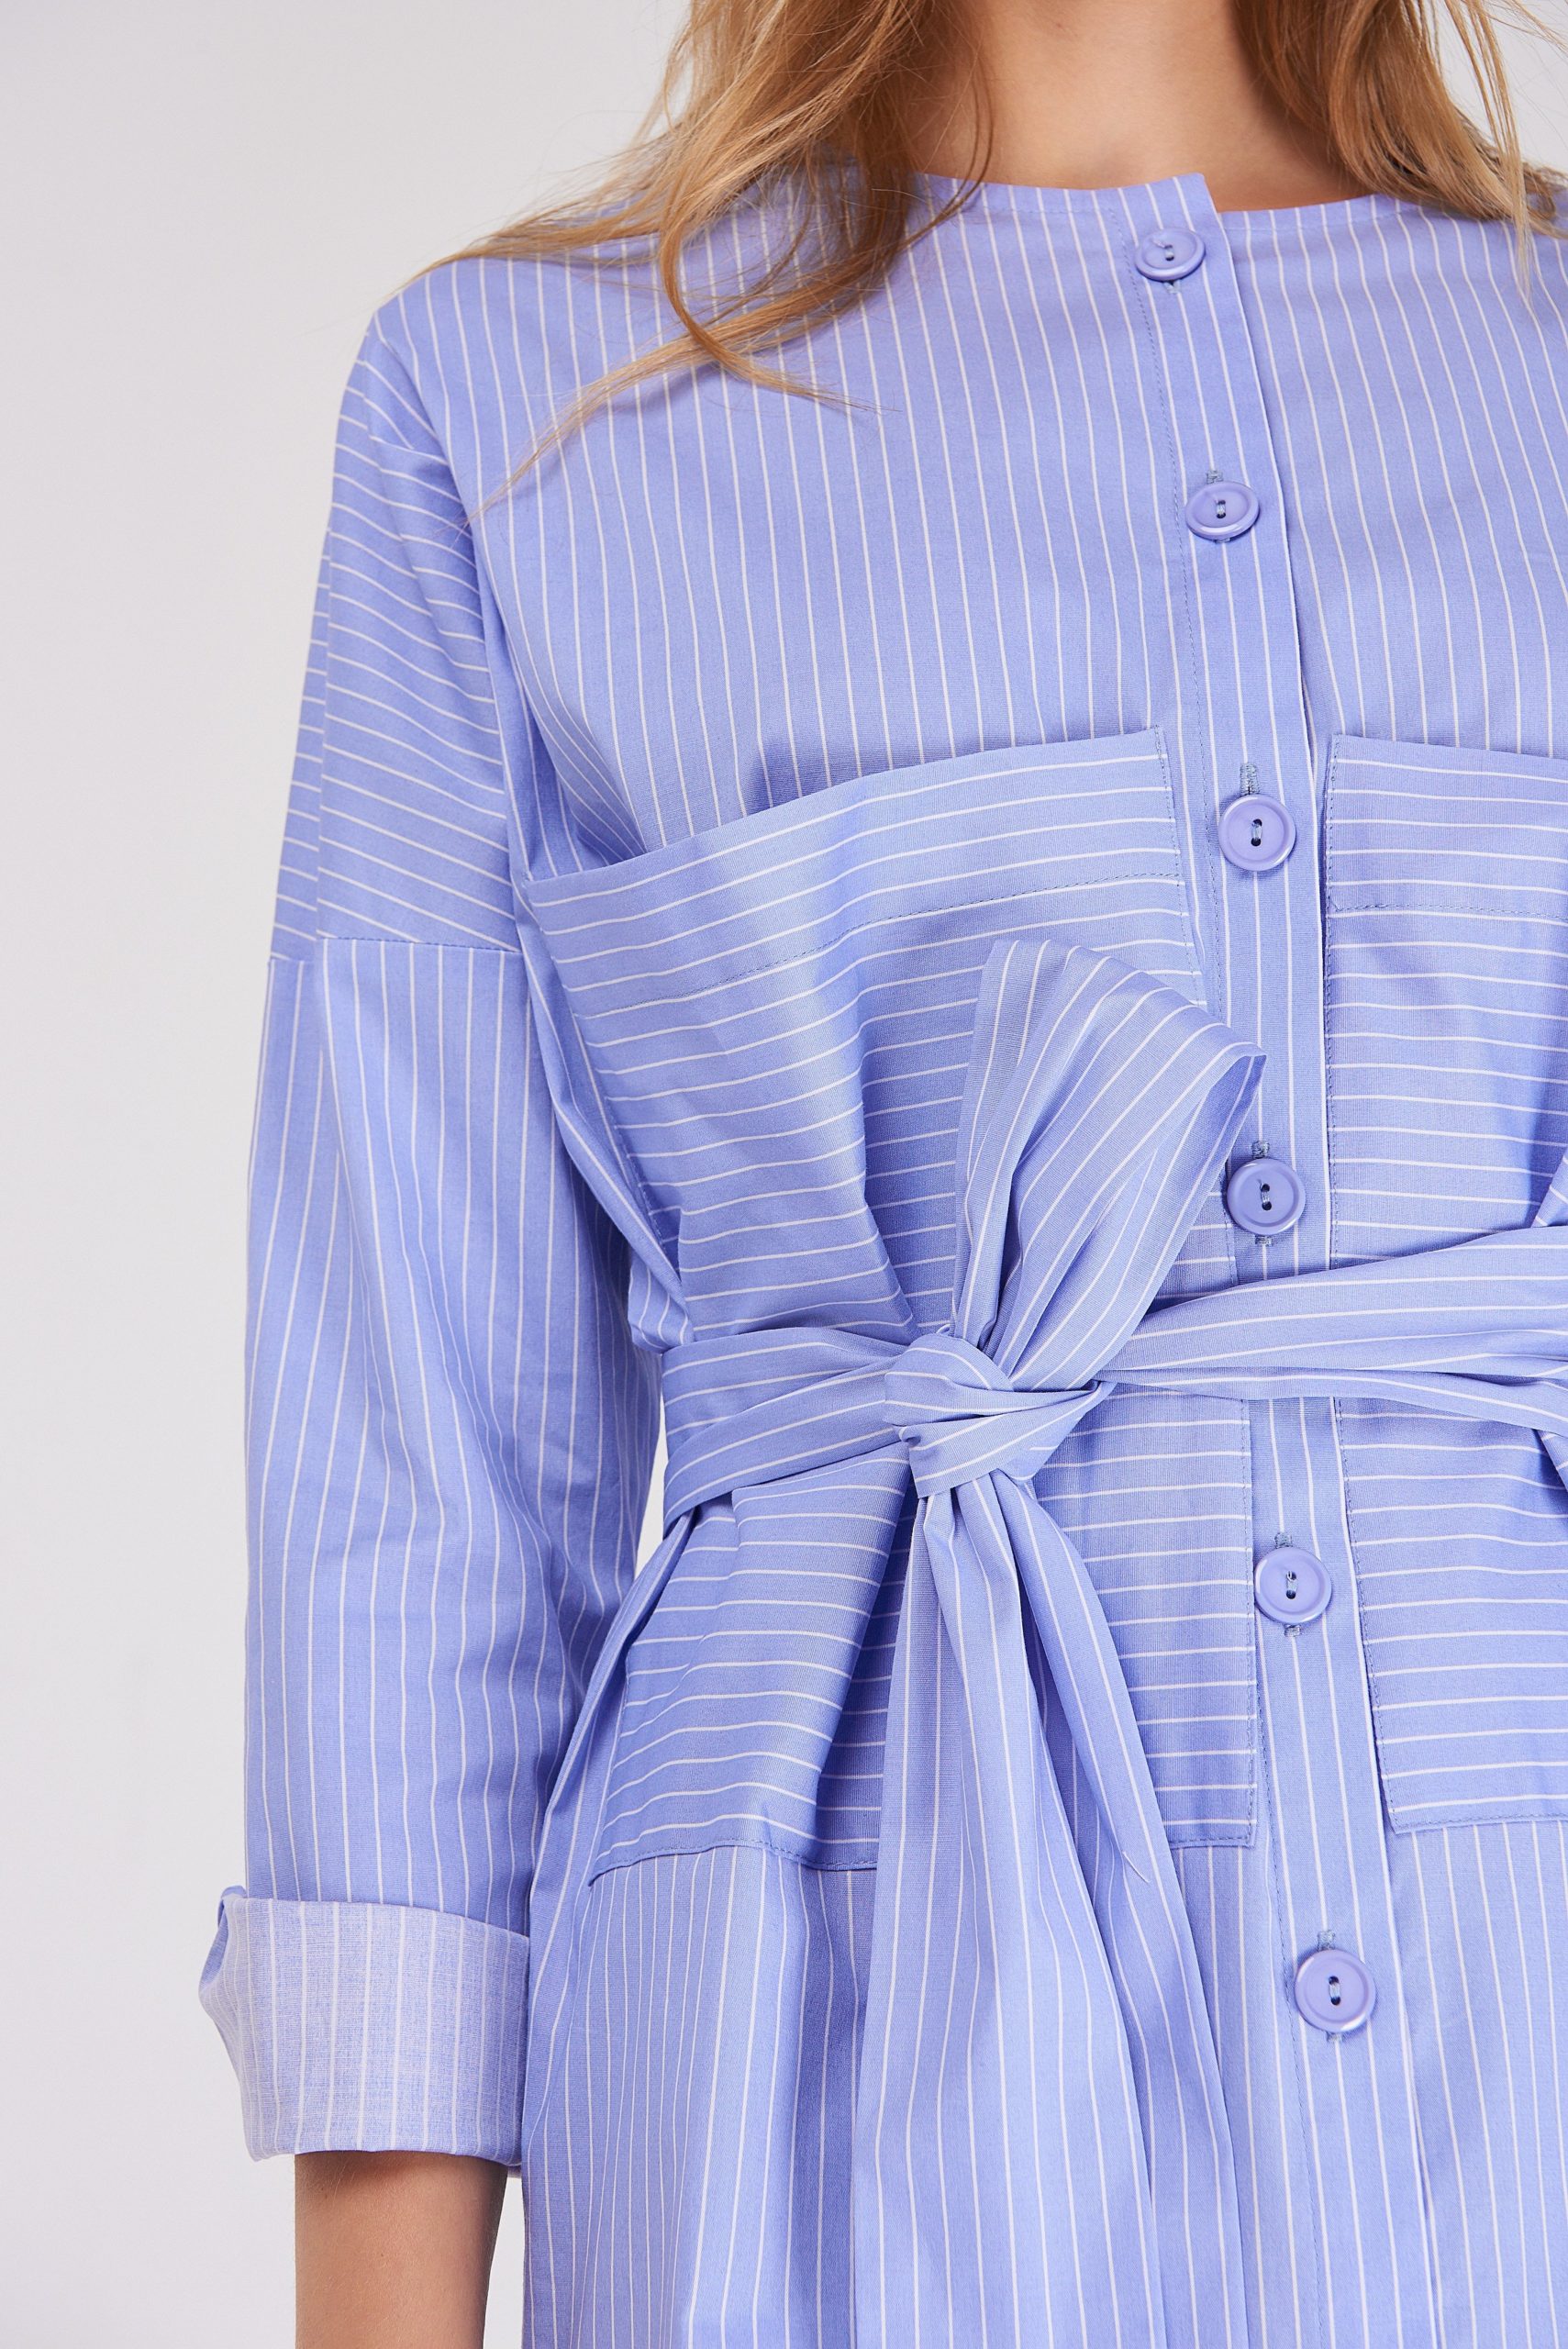 https://odezhda-oversize.ru/wp-content/uploads/2020/07/kimono-stripe-blue-6-scaled.jpg